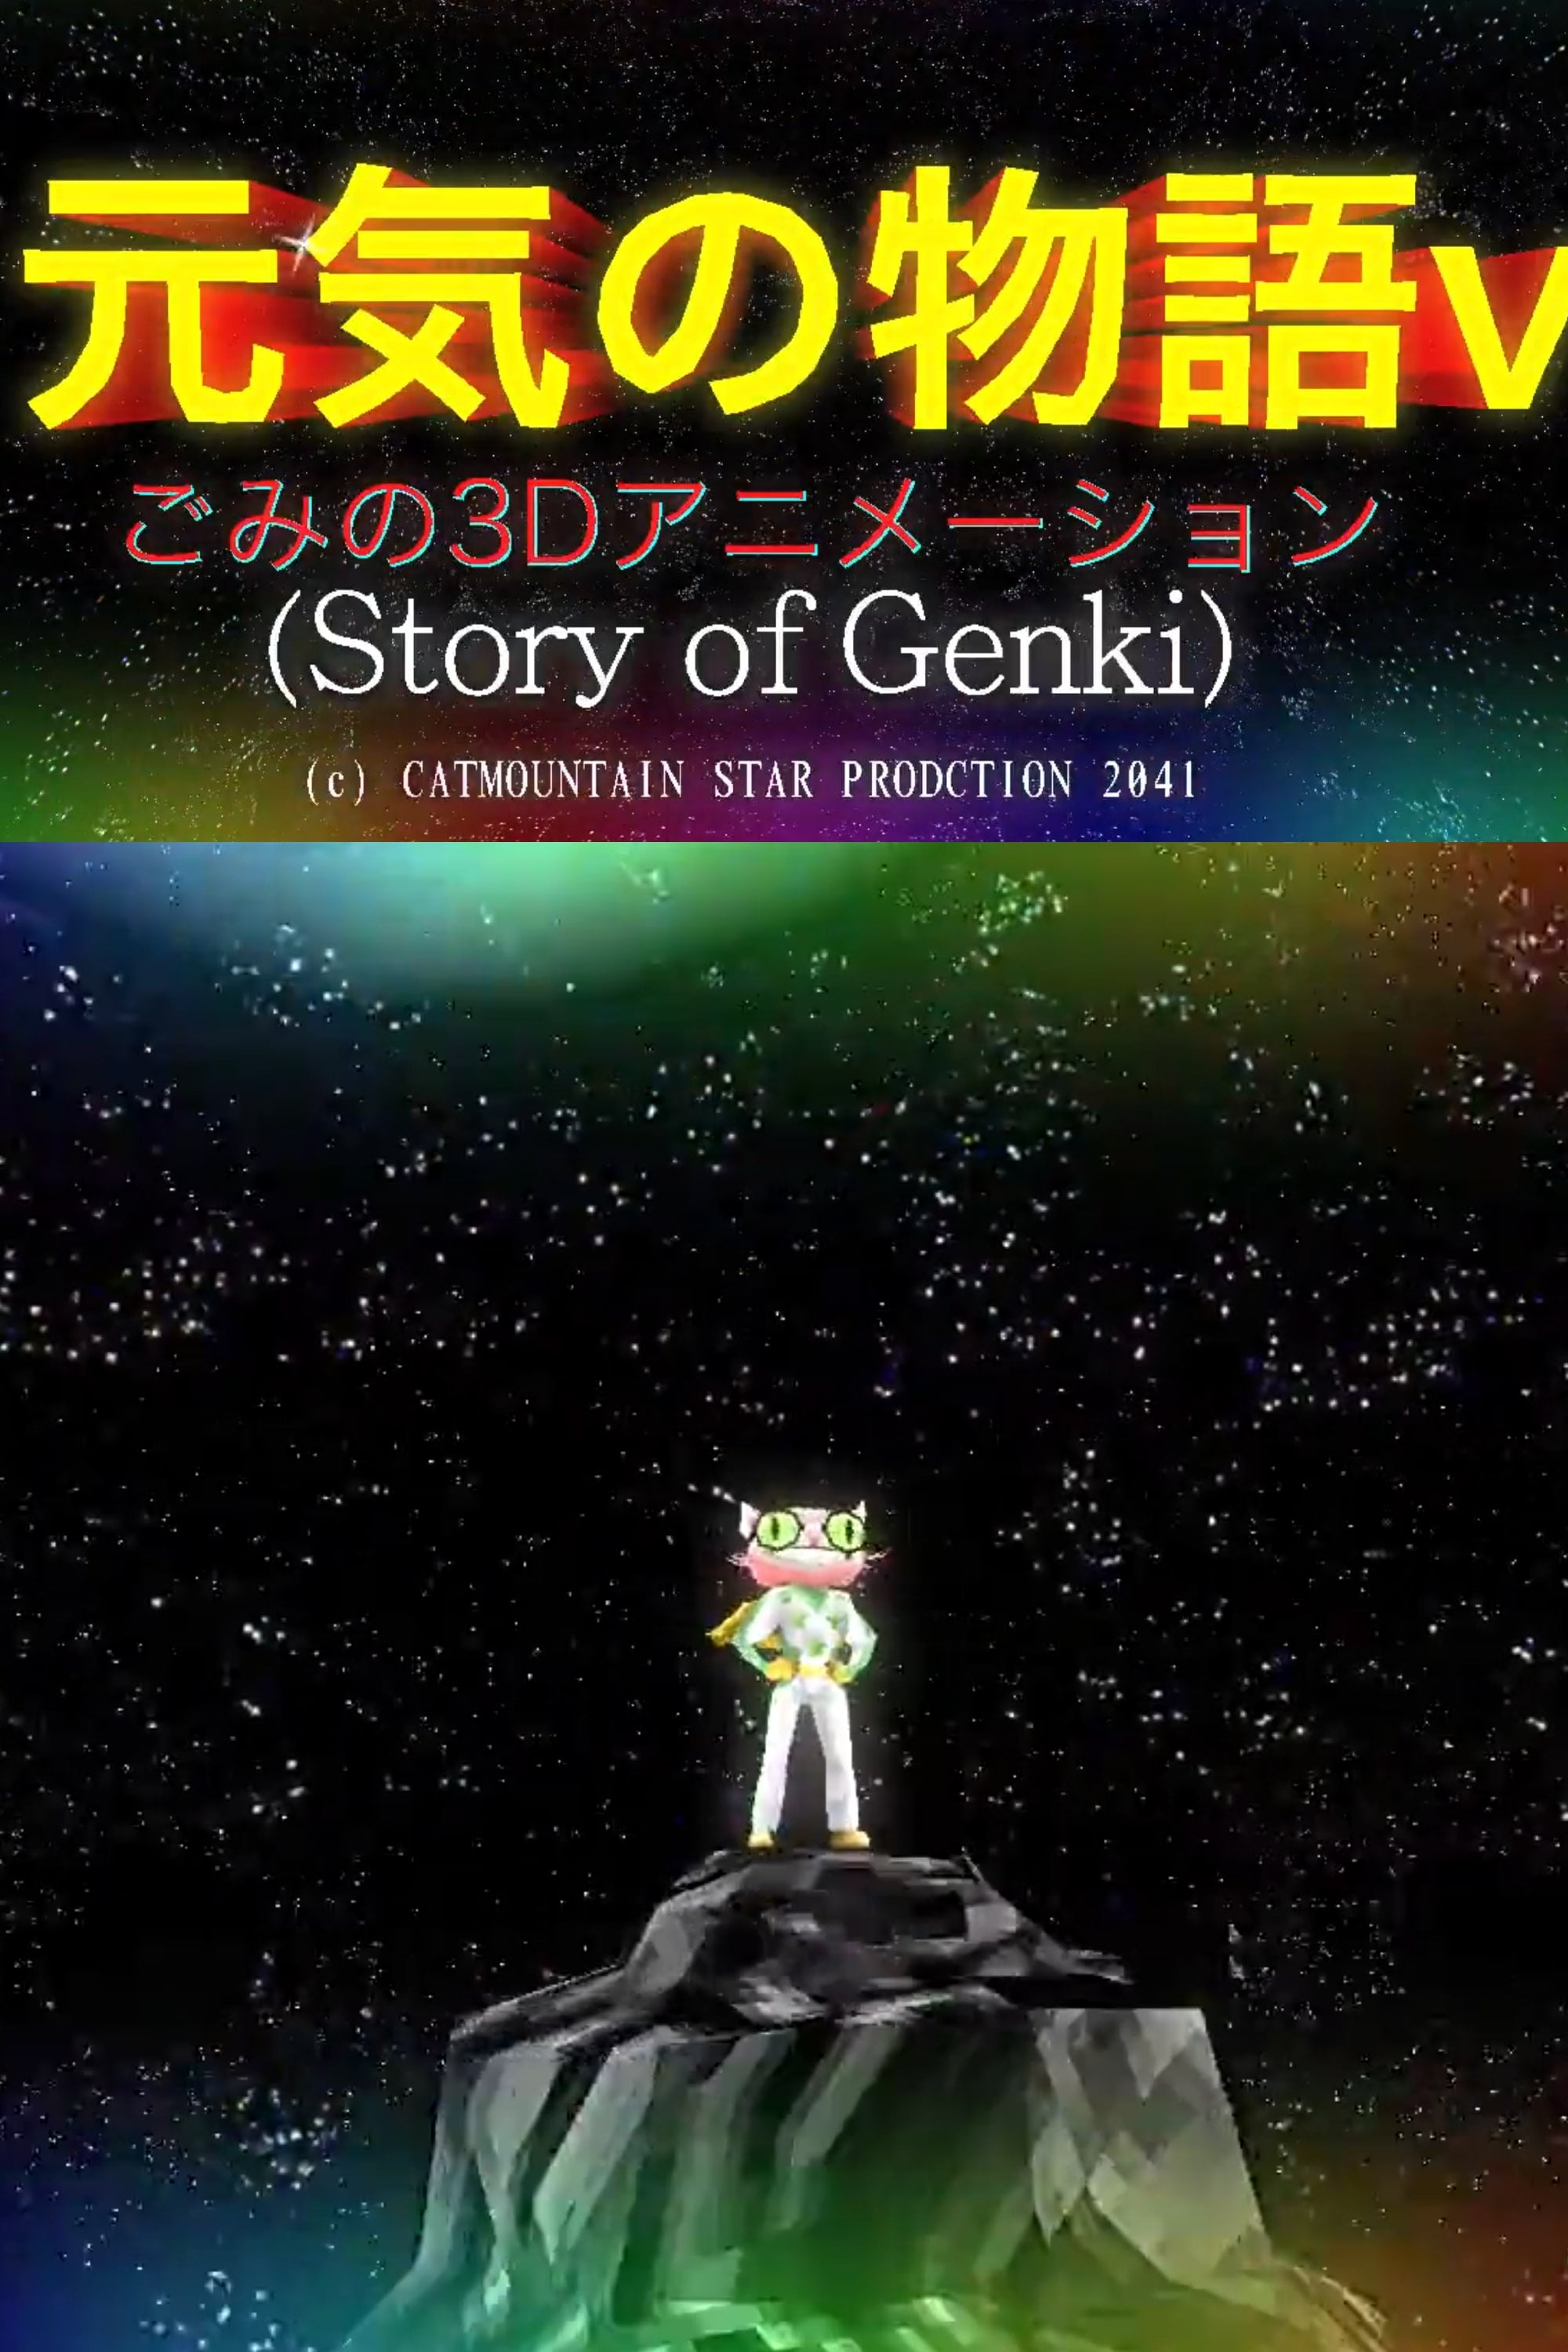 The Story of Genki